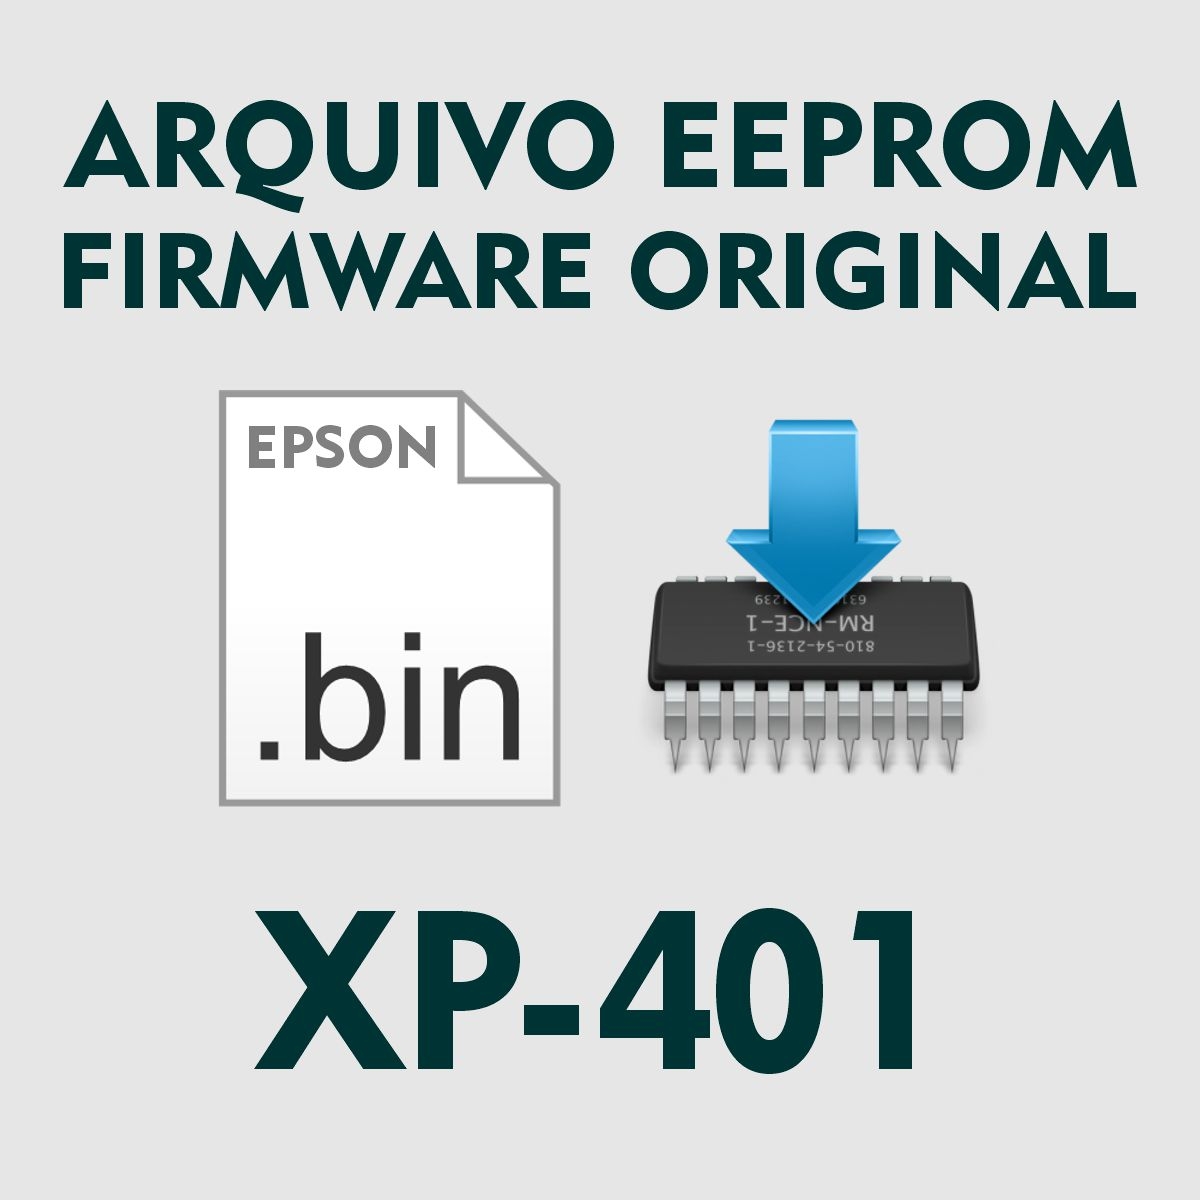 Epson XP-401 | Arquivo de Eeprom Firmware .bin - Original